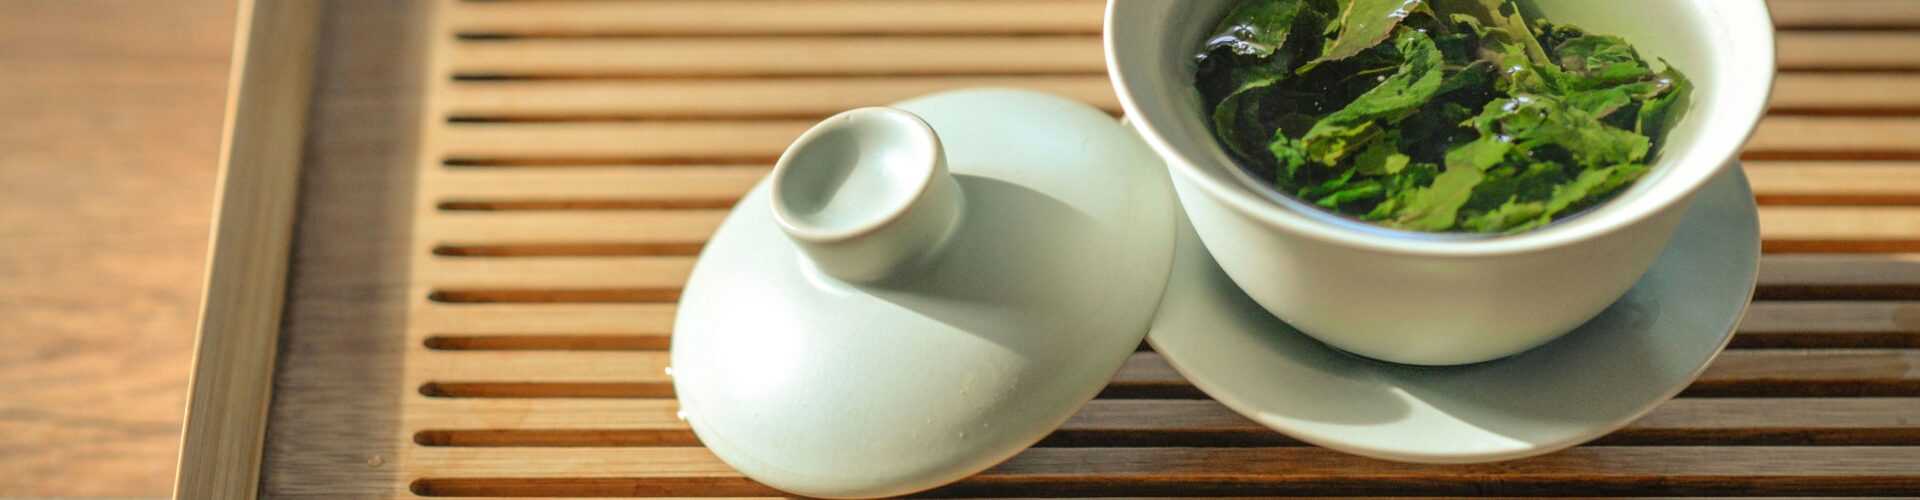 green tea wellness detox